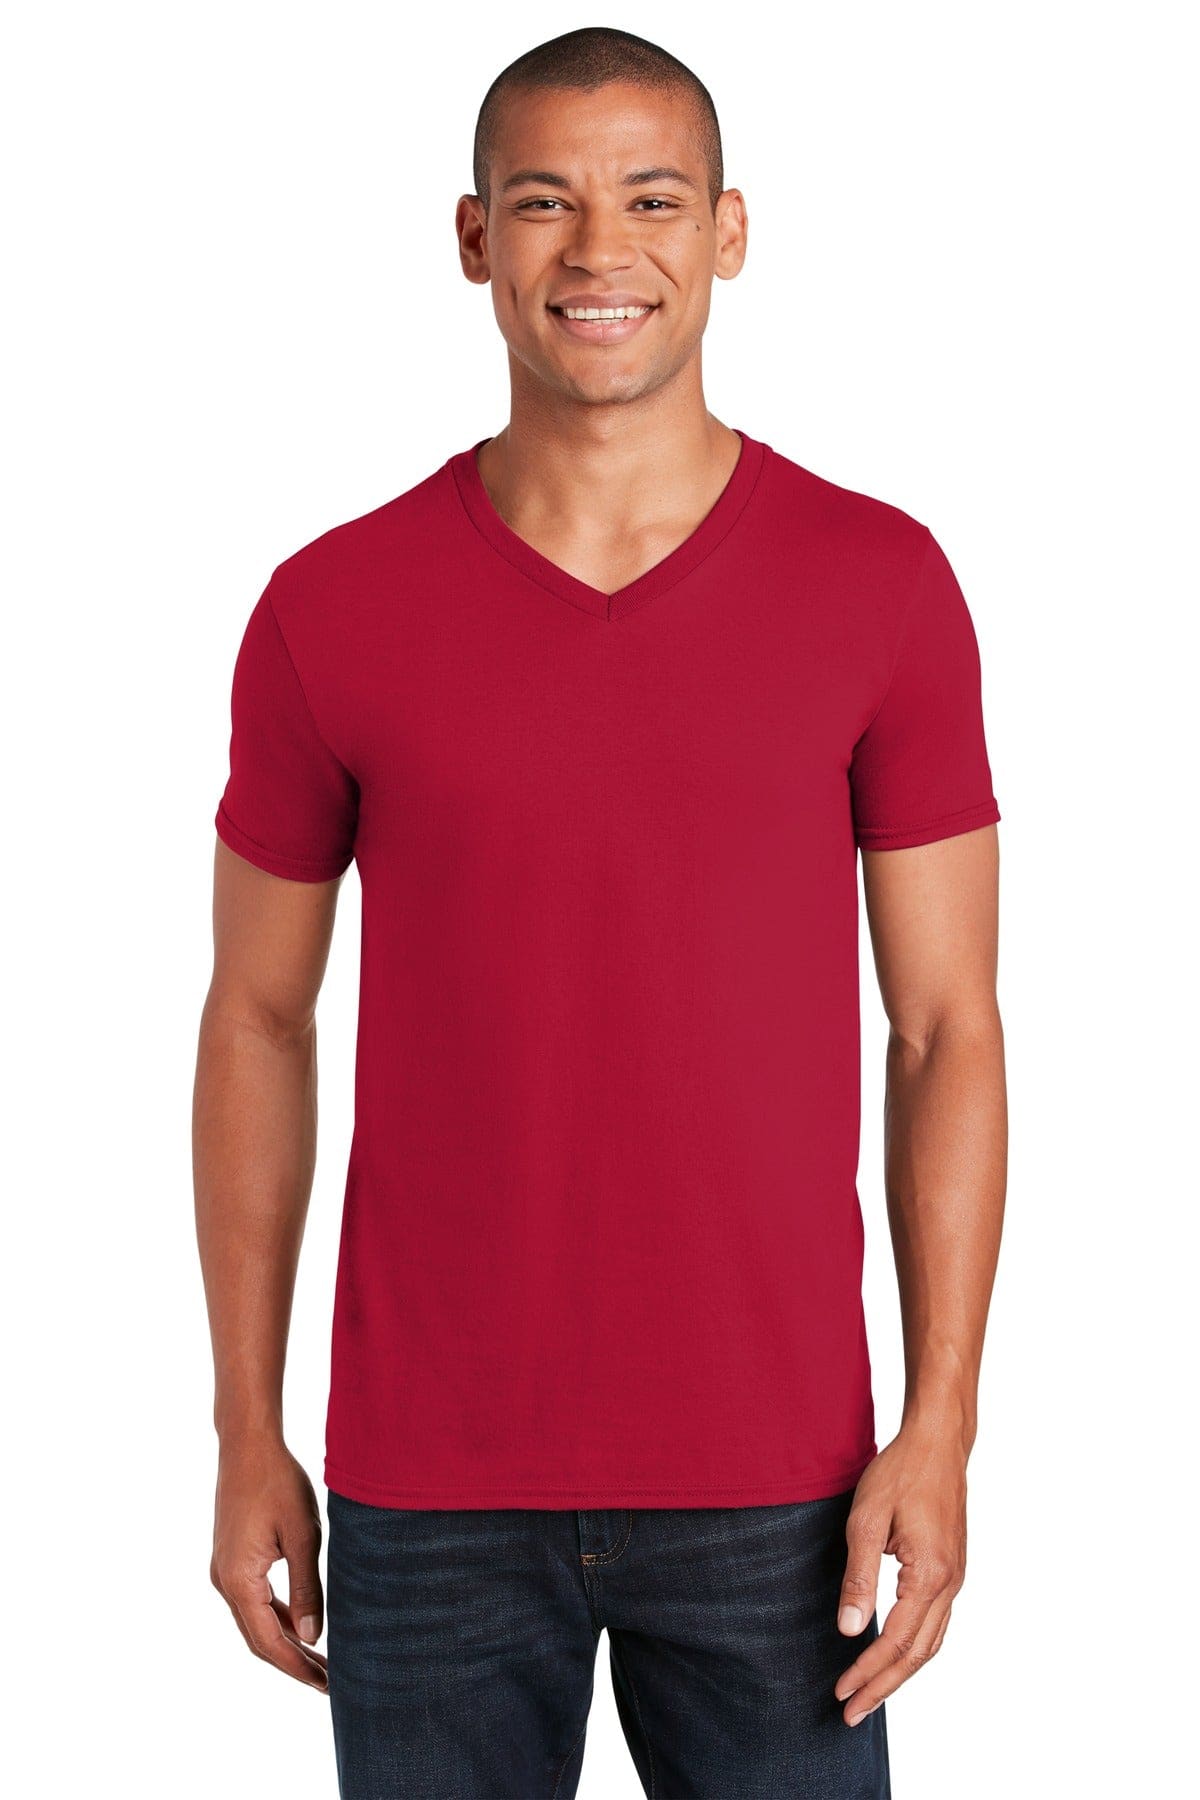 Gildan Softstyle V - neck T - shirt. 64v00 - Activewear T - Tops / Shirtss